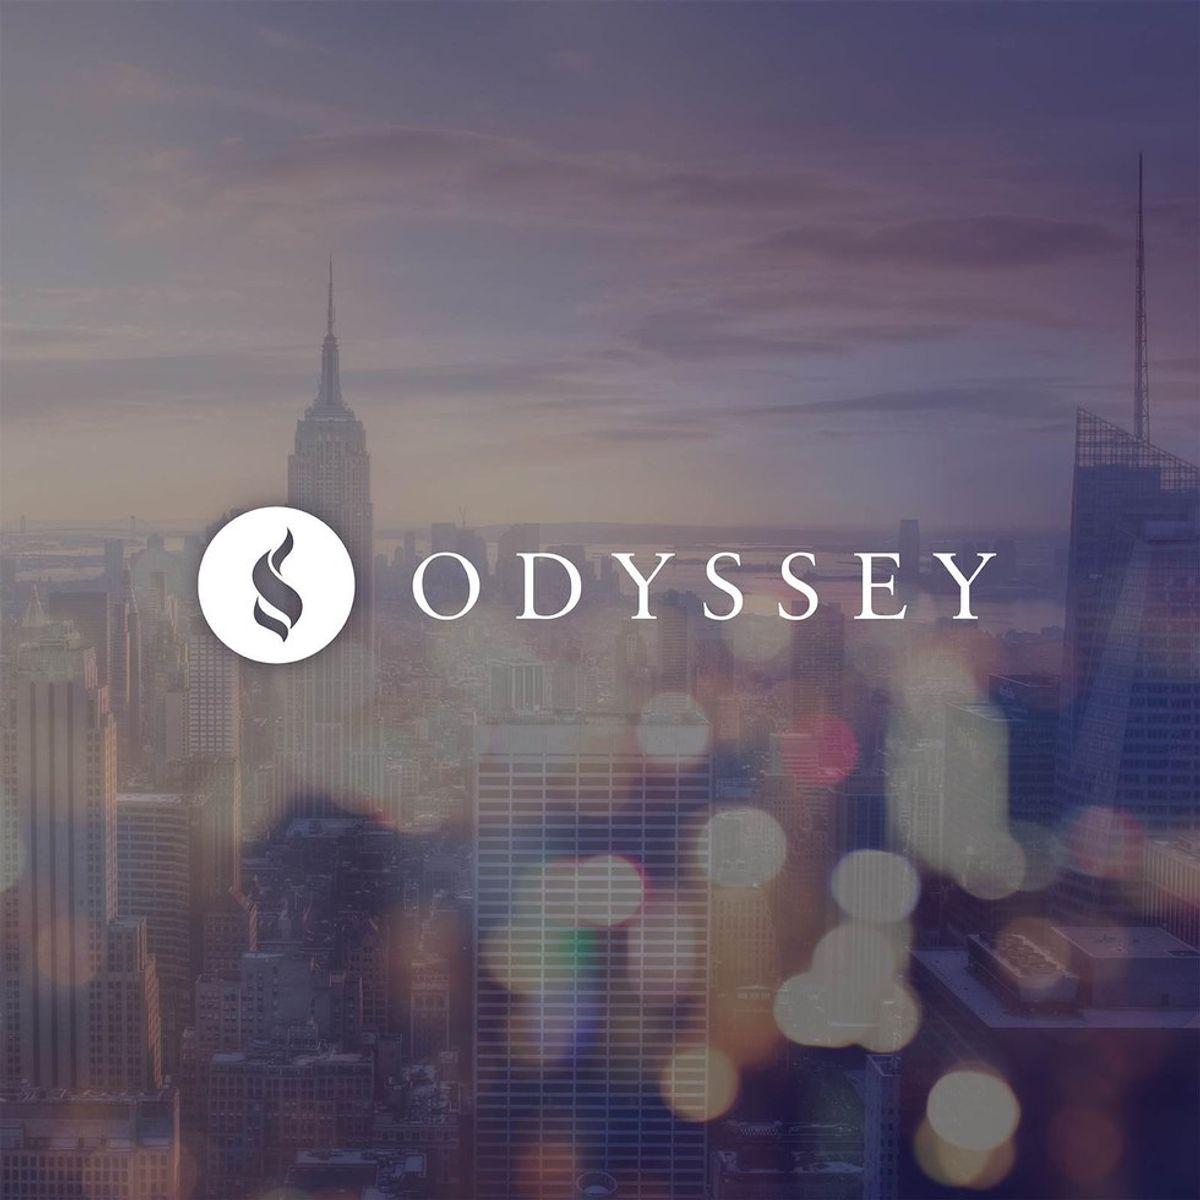 Why I Appreciate Odyssey